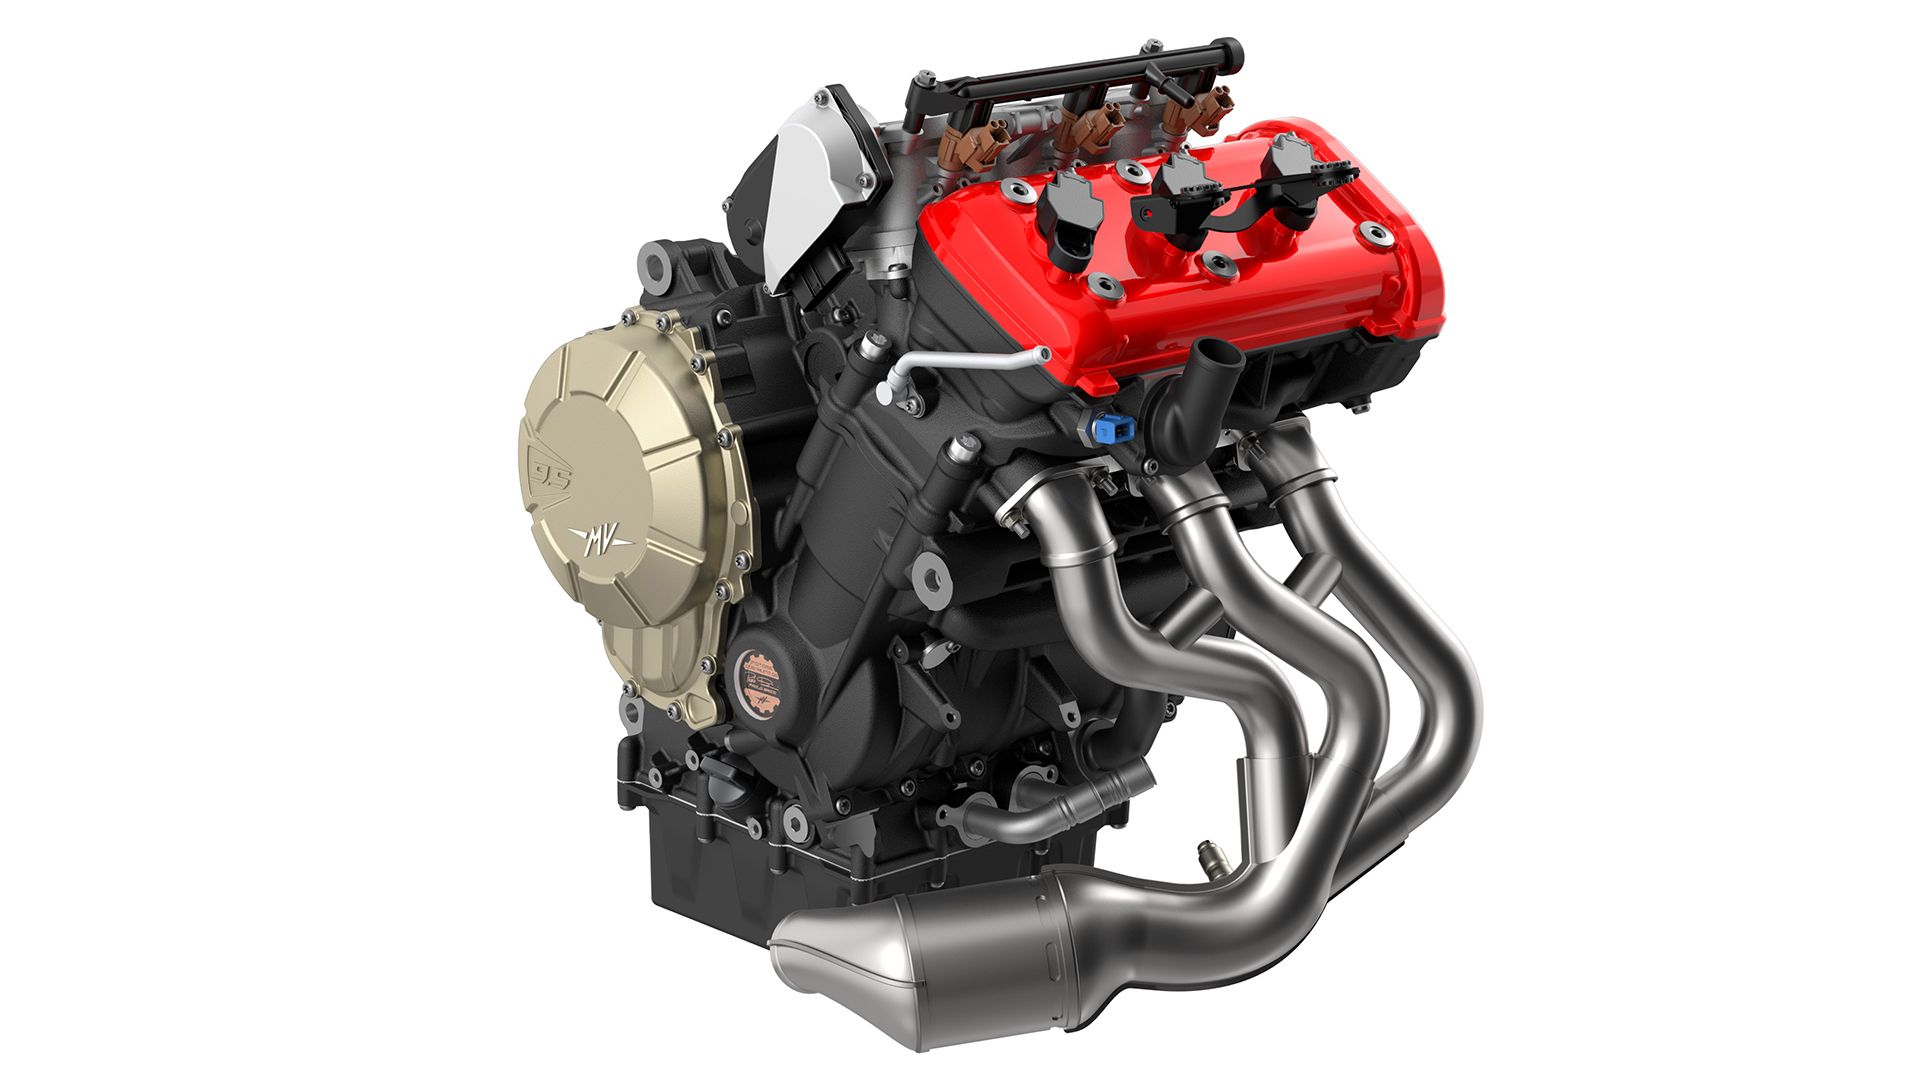 MV Agusta new 931cc inline-triple engine